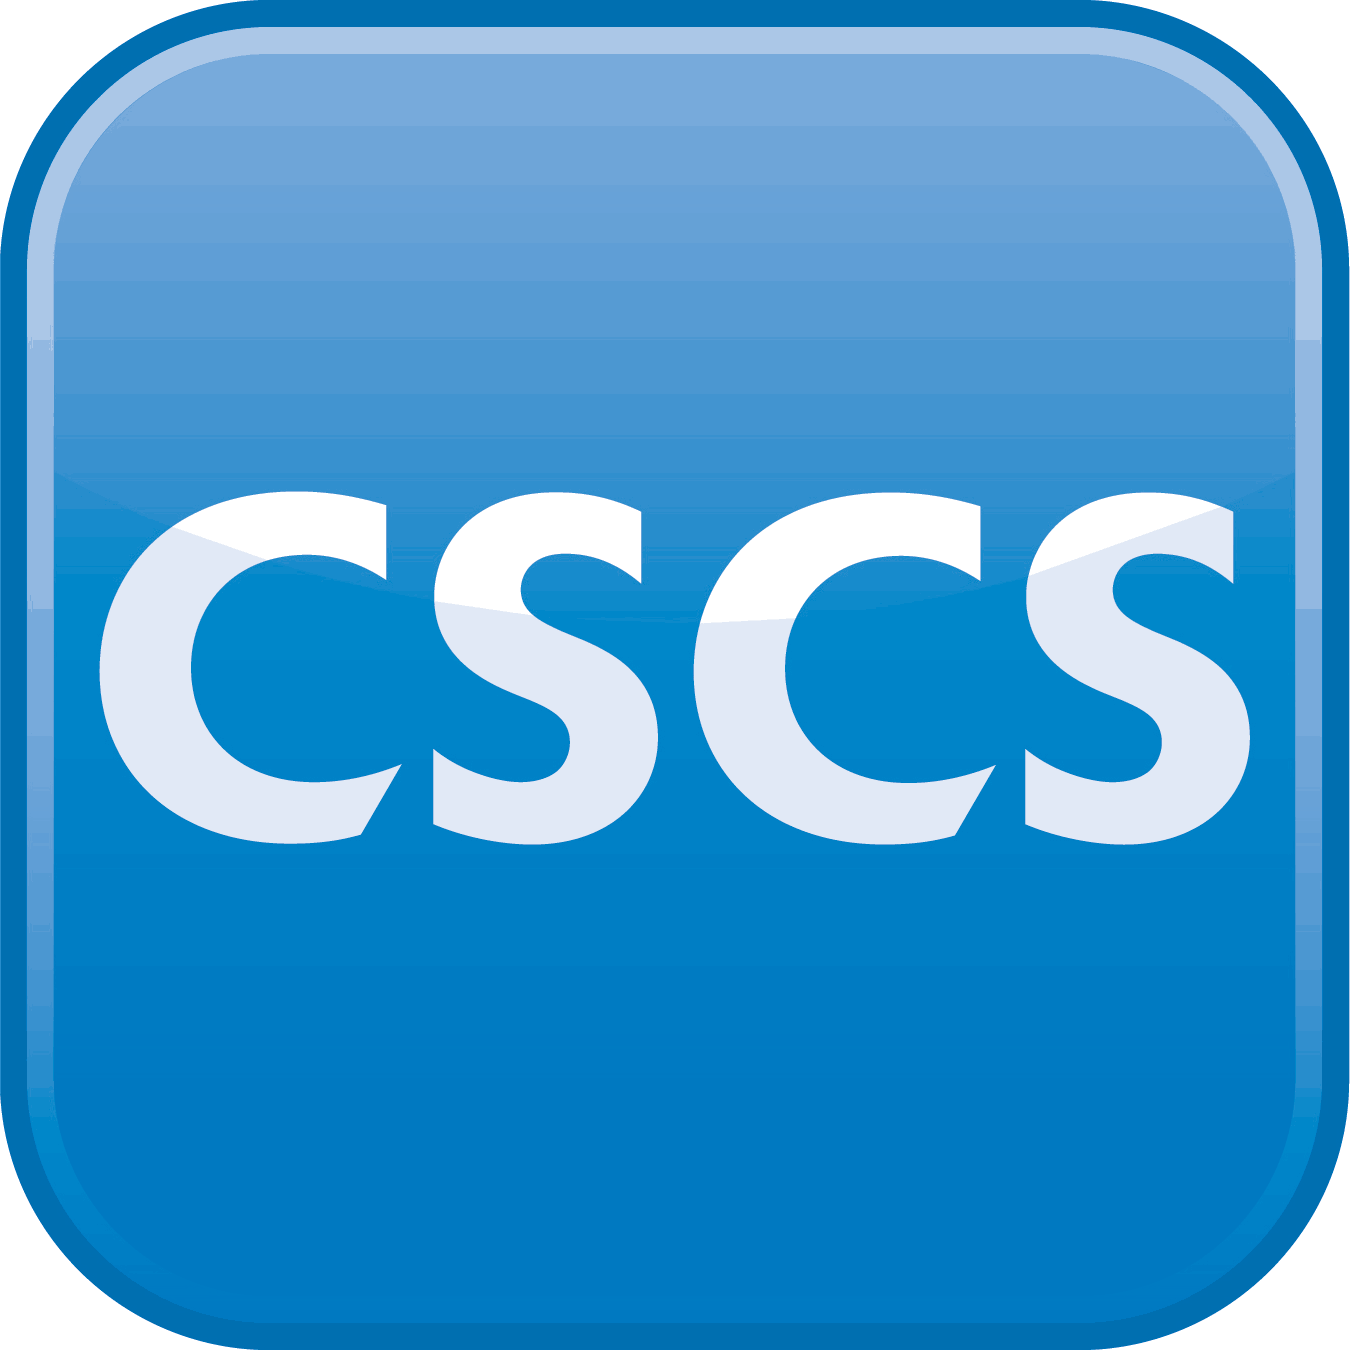 CSCS (Construction Skills Certificate Scheme) Logo